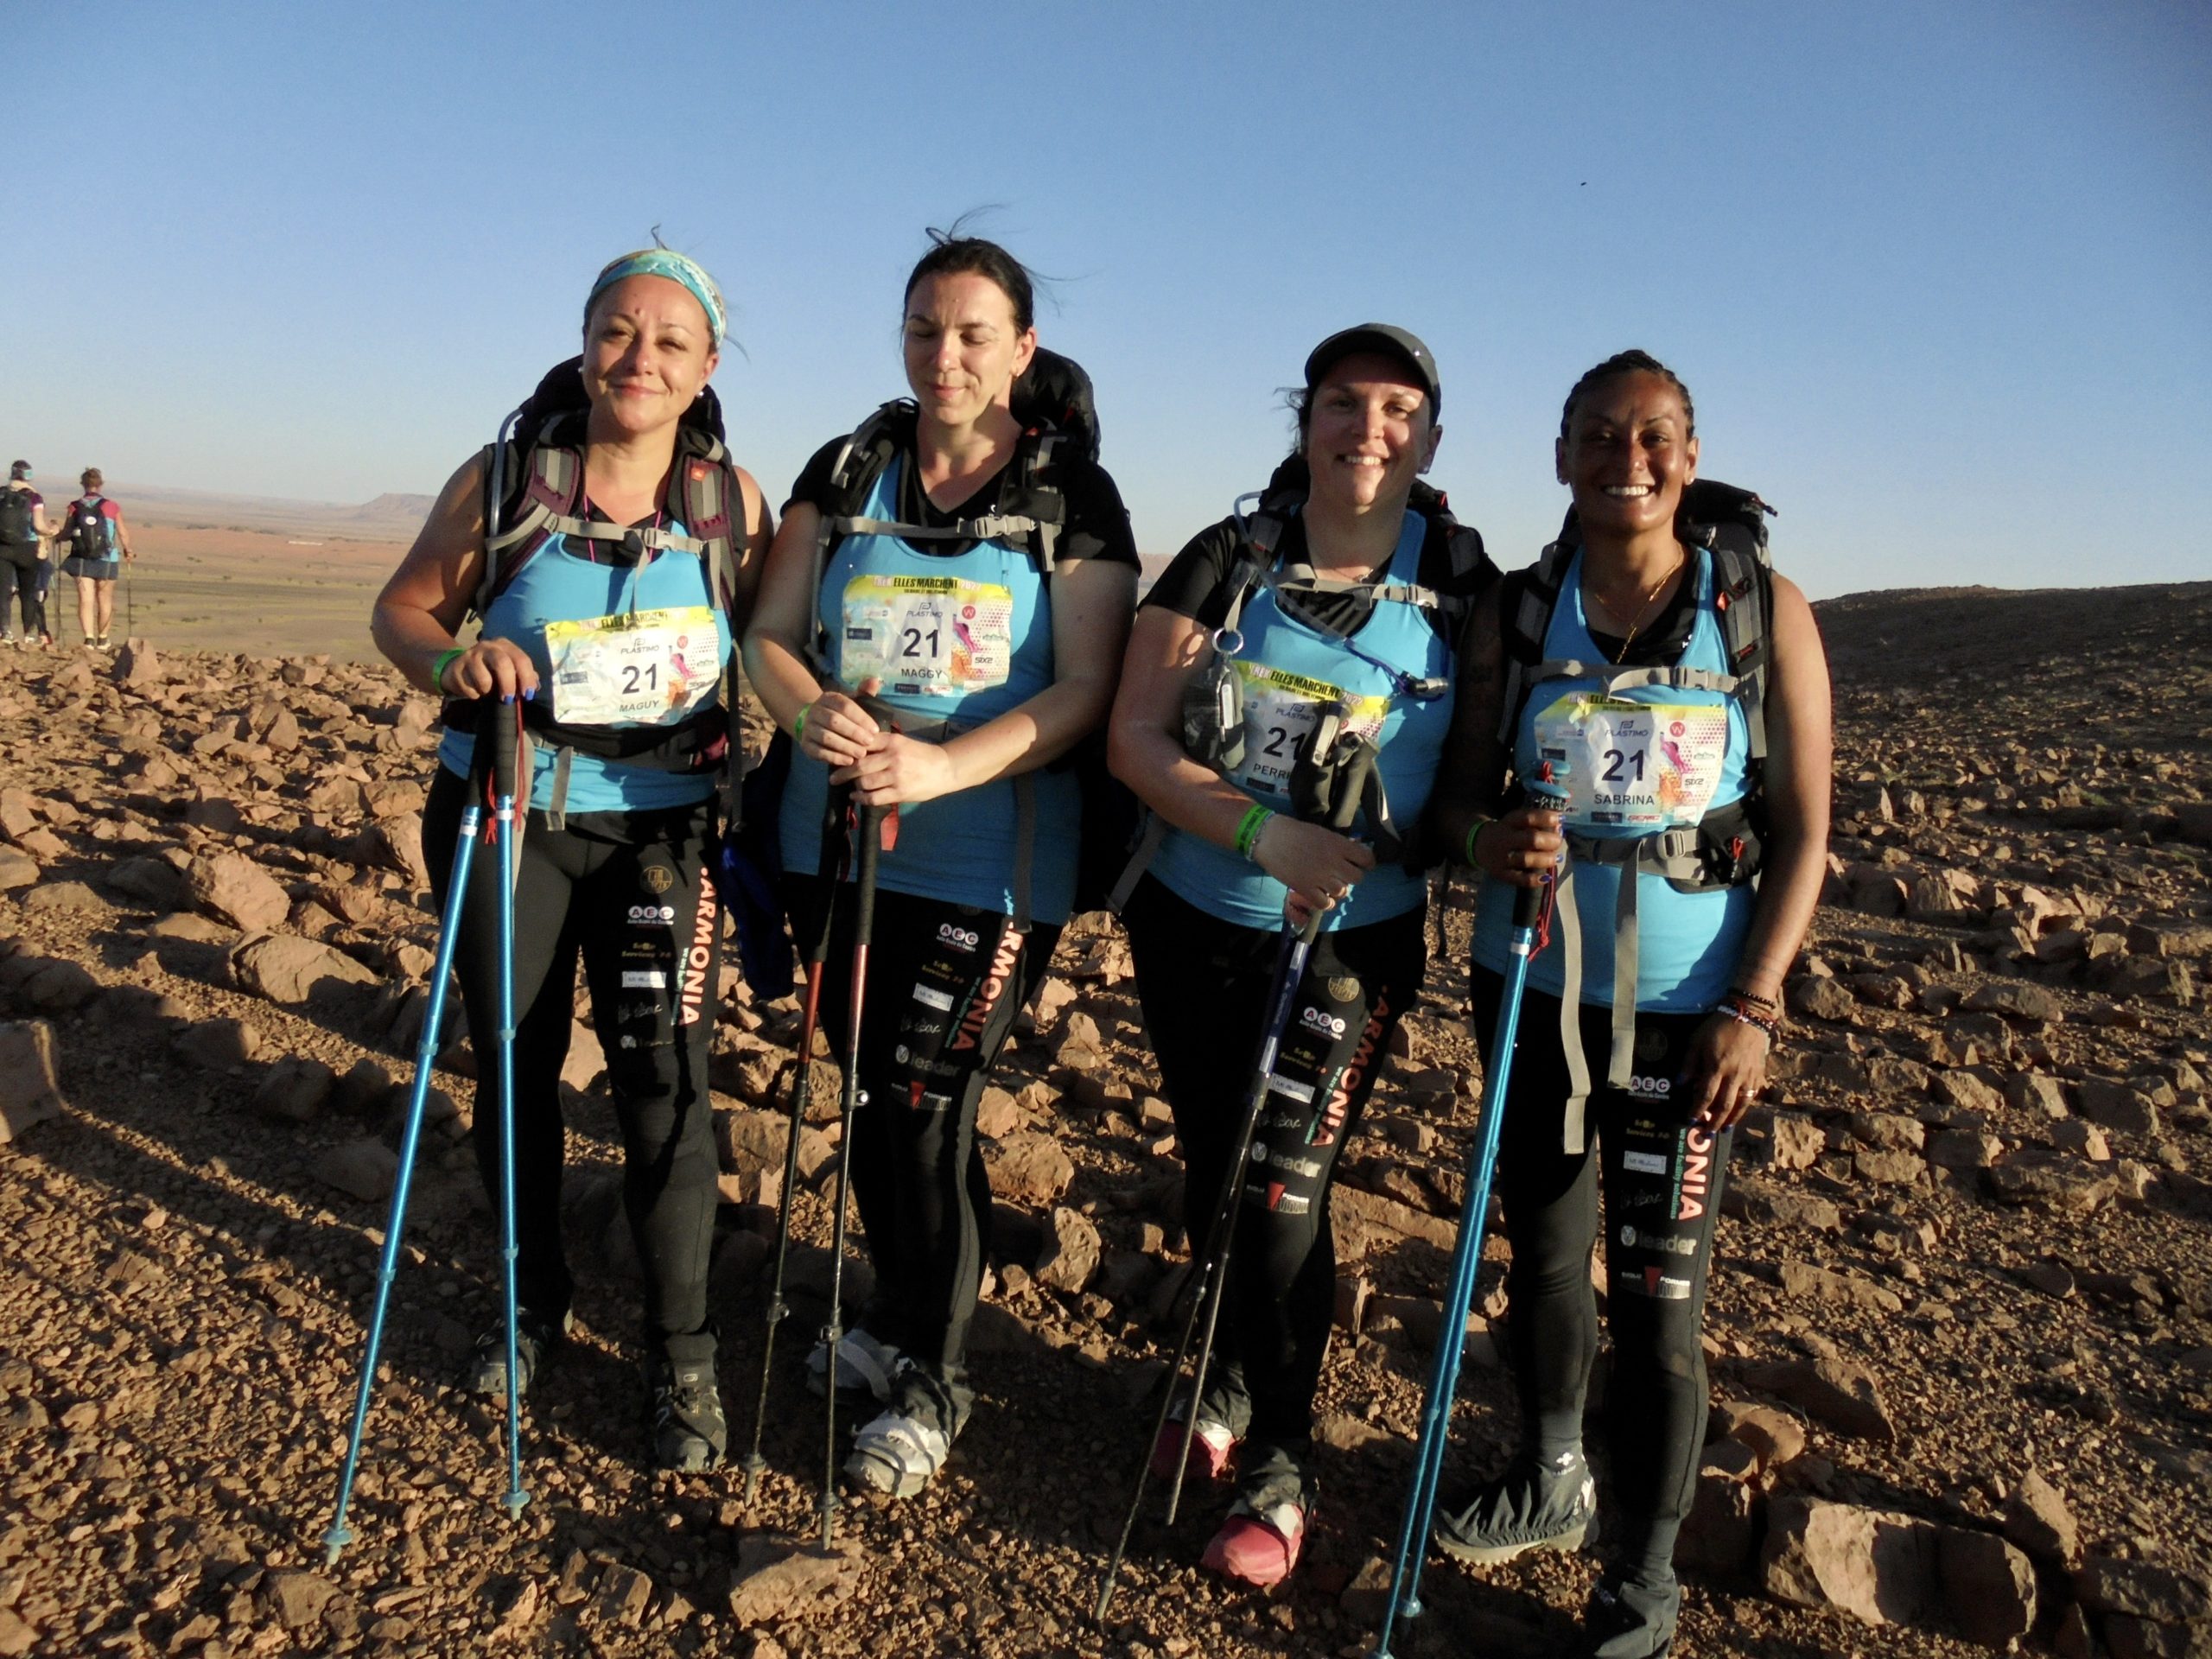 Return of the “Elles marchent” trek for Maguy Bastien and her team